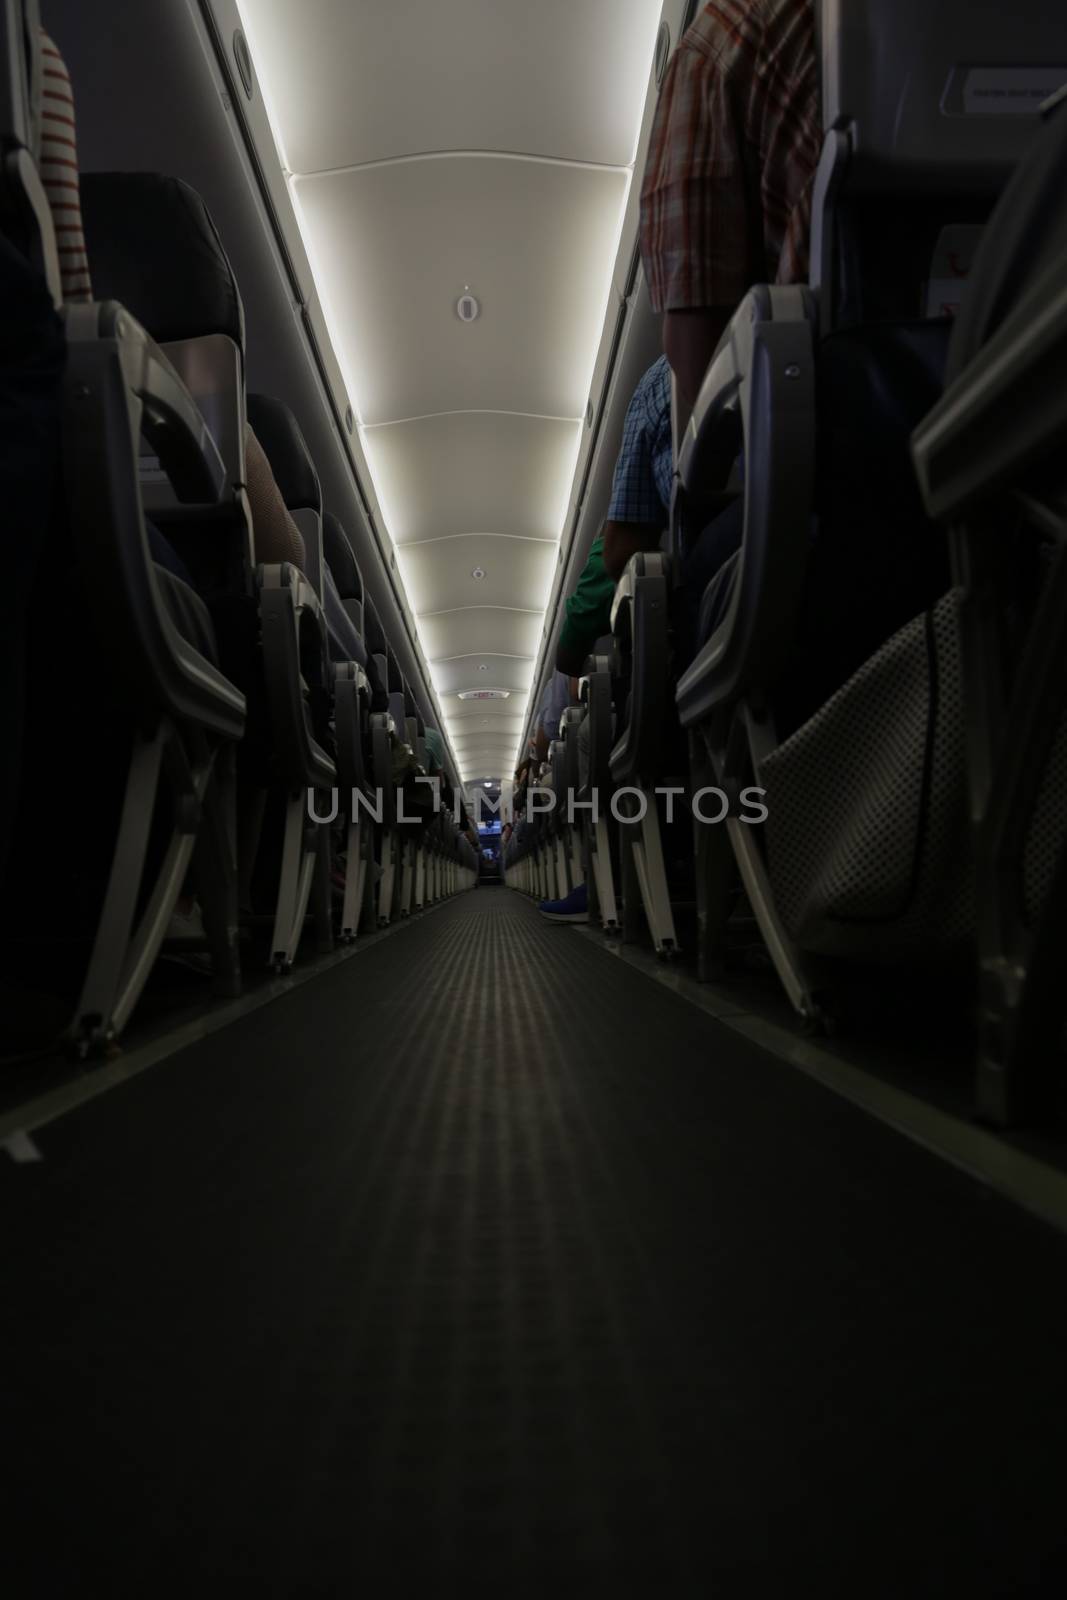 Airplane aisle view by Kartouchken